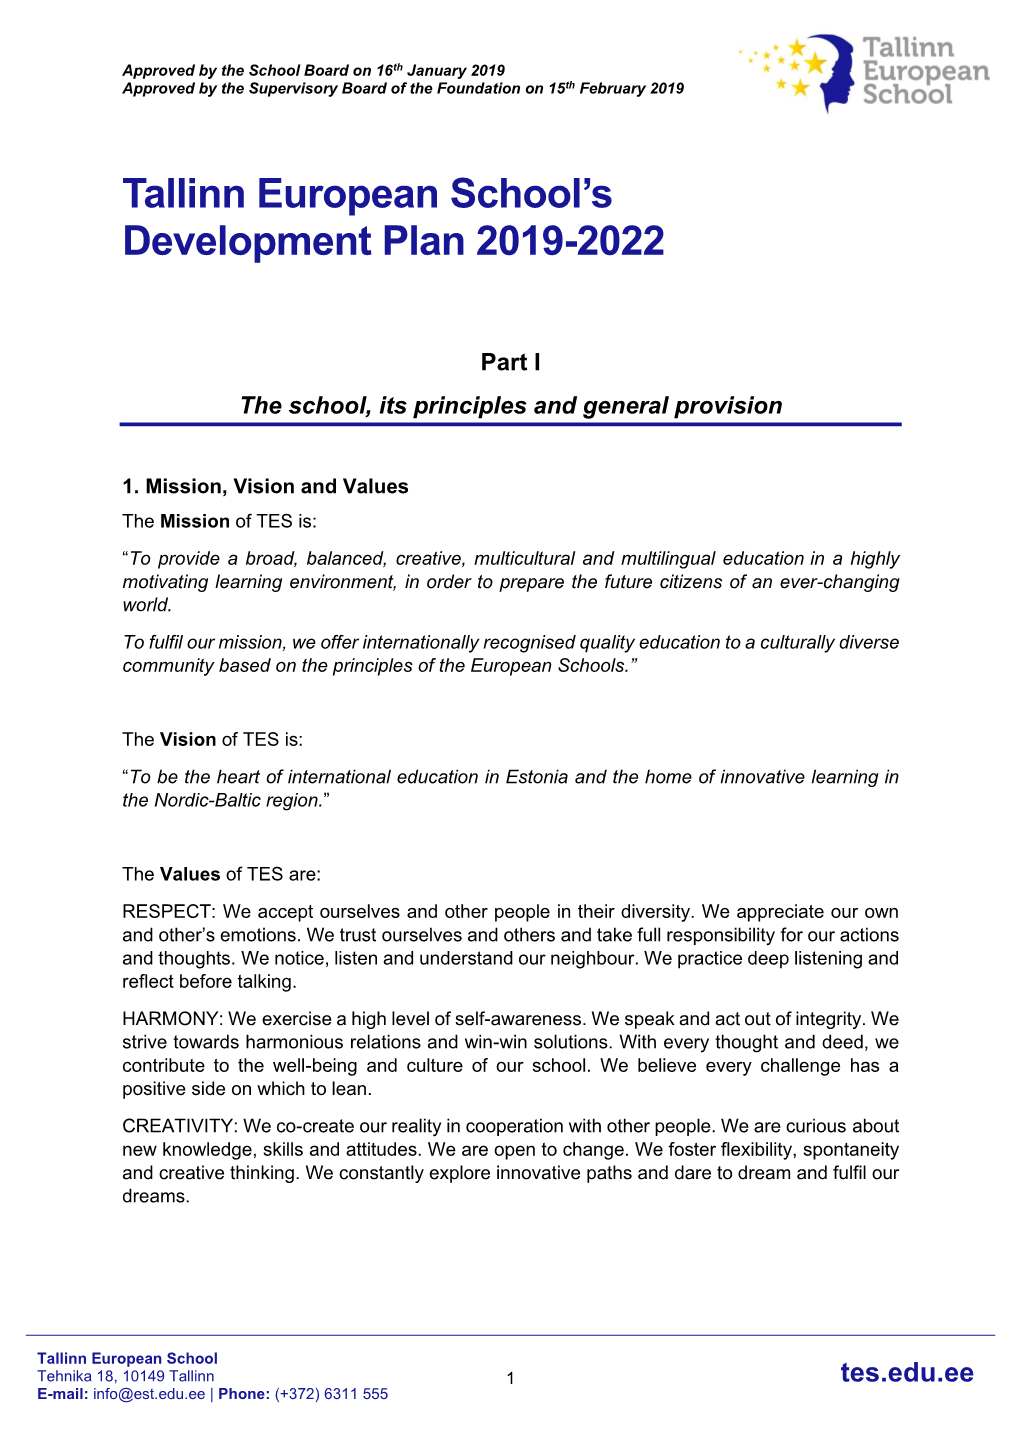 Development Plan 2019-2022